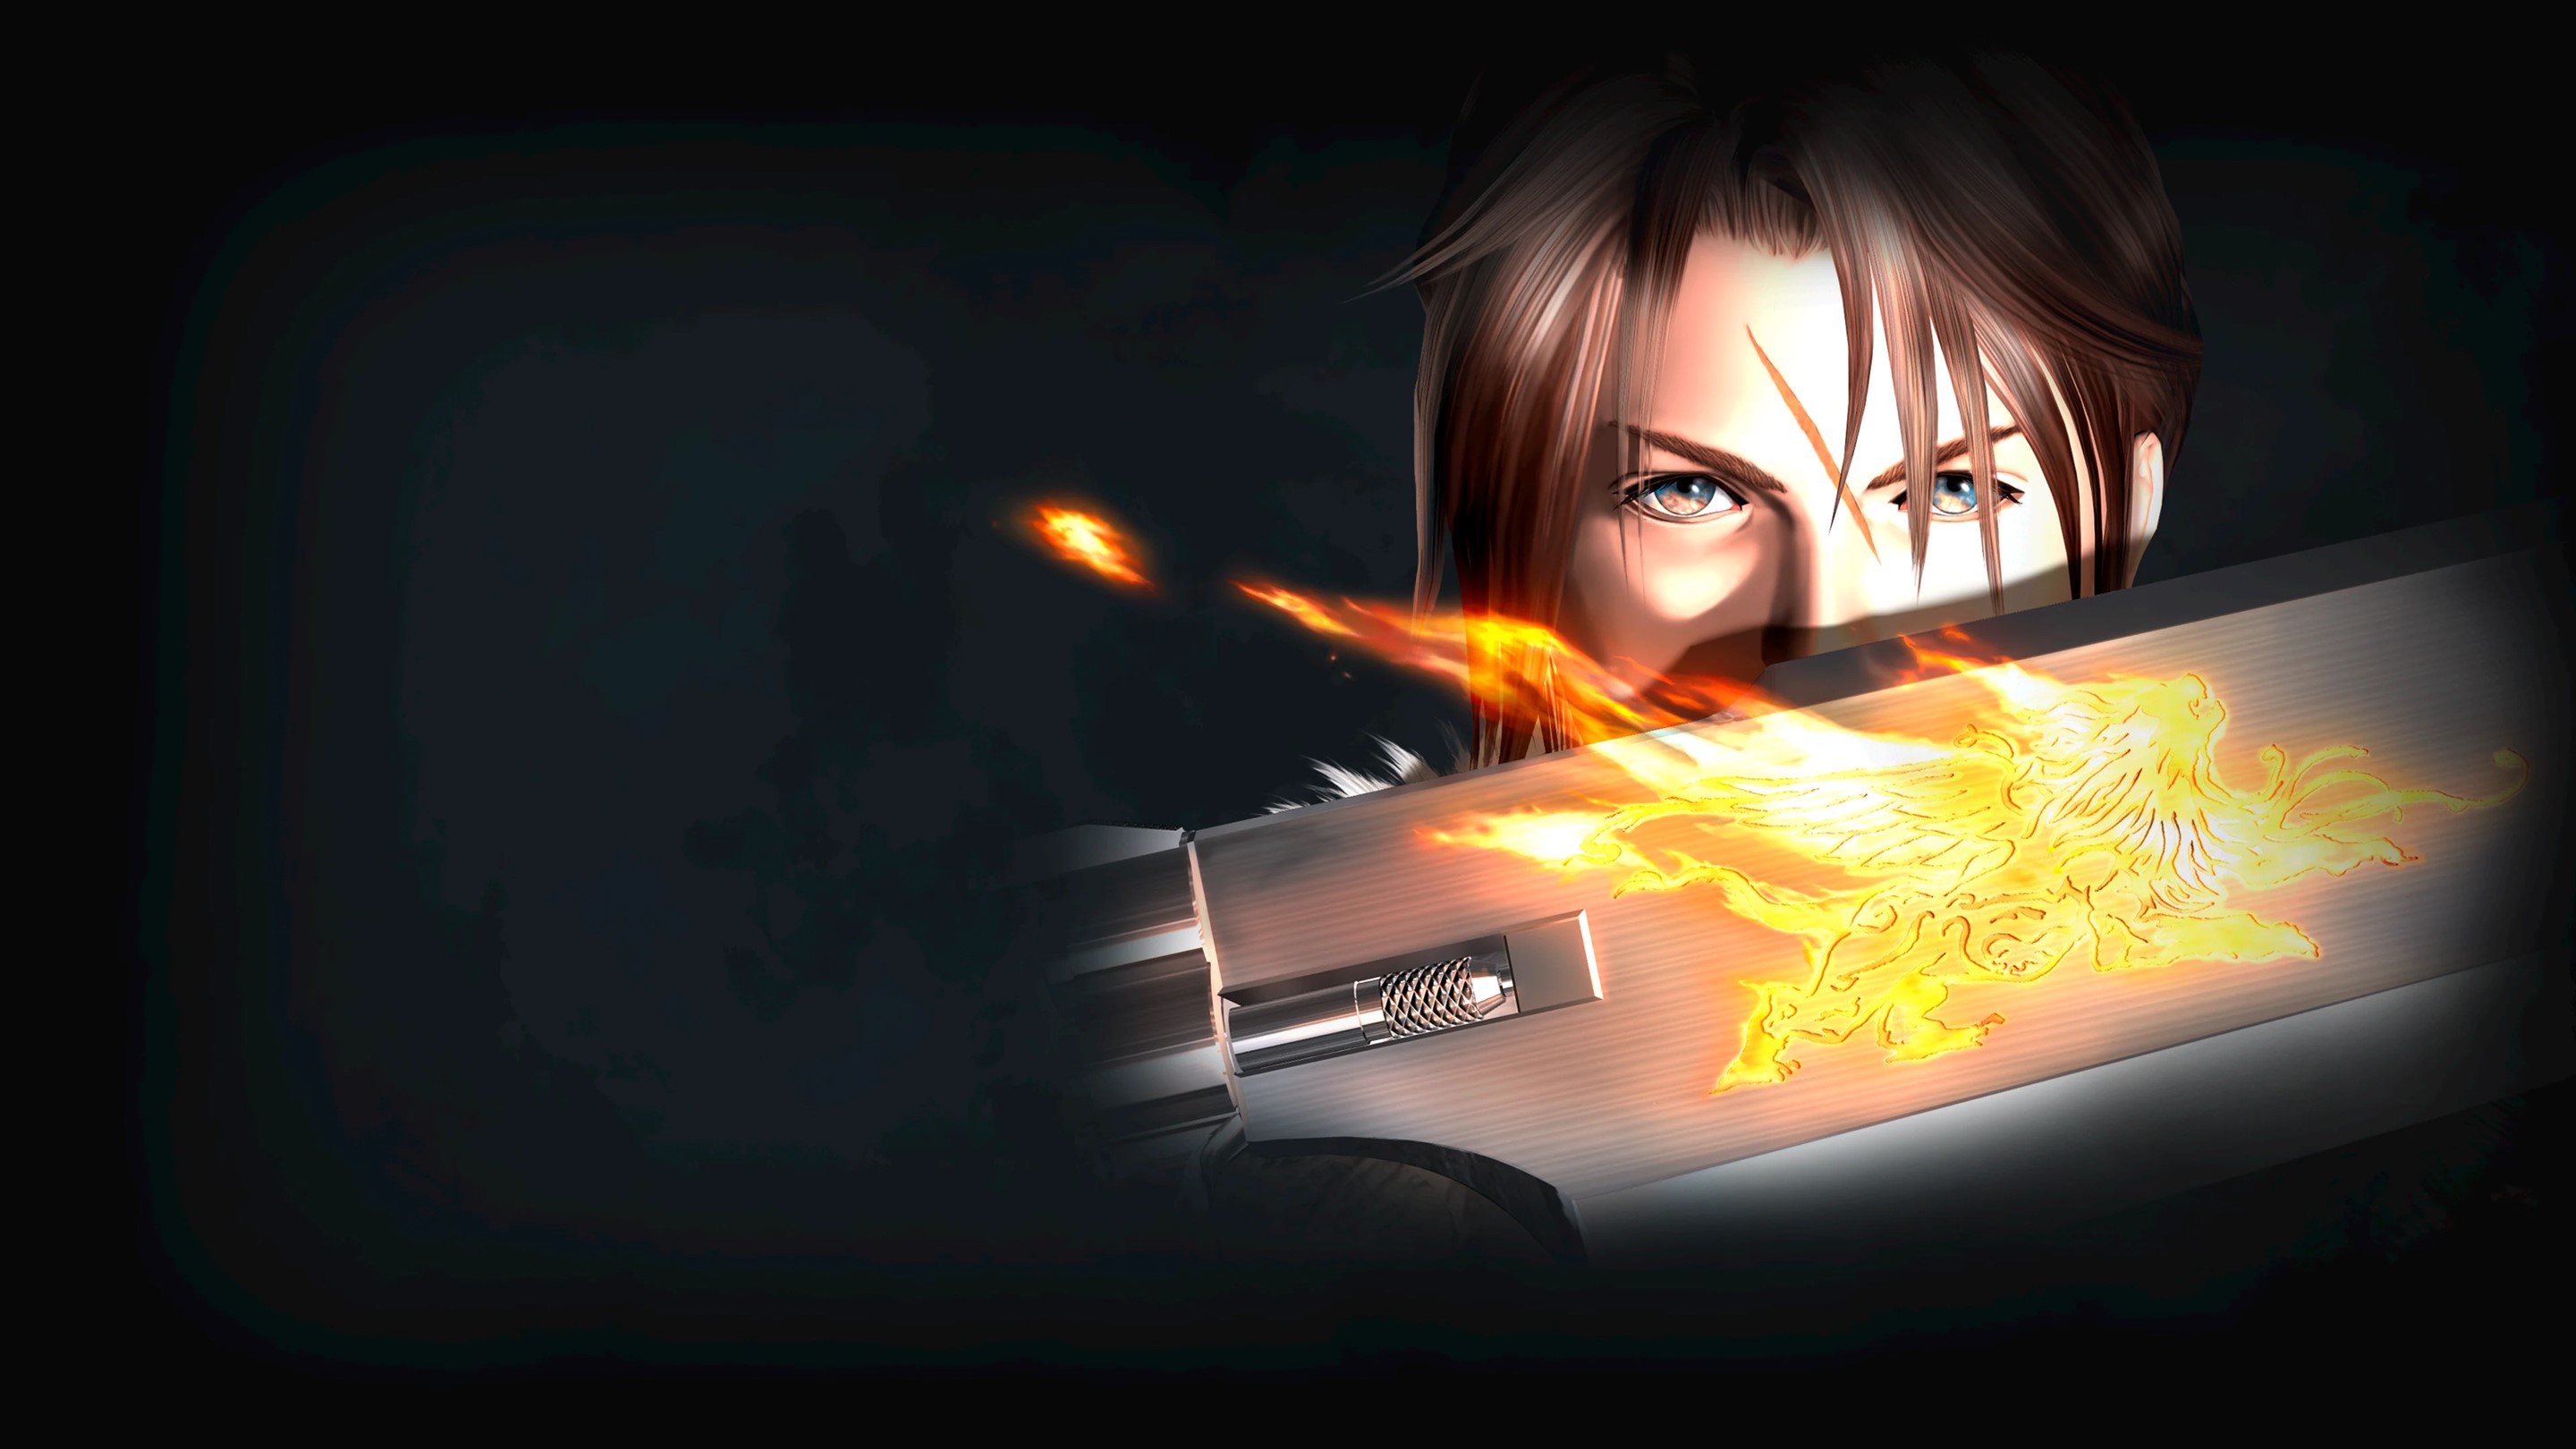 Análisis  Final Fantasy VIII Remastered – RegionPlayStation